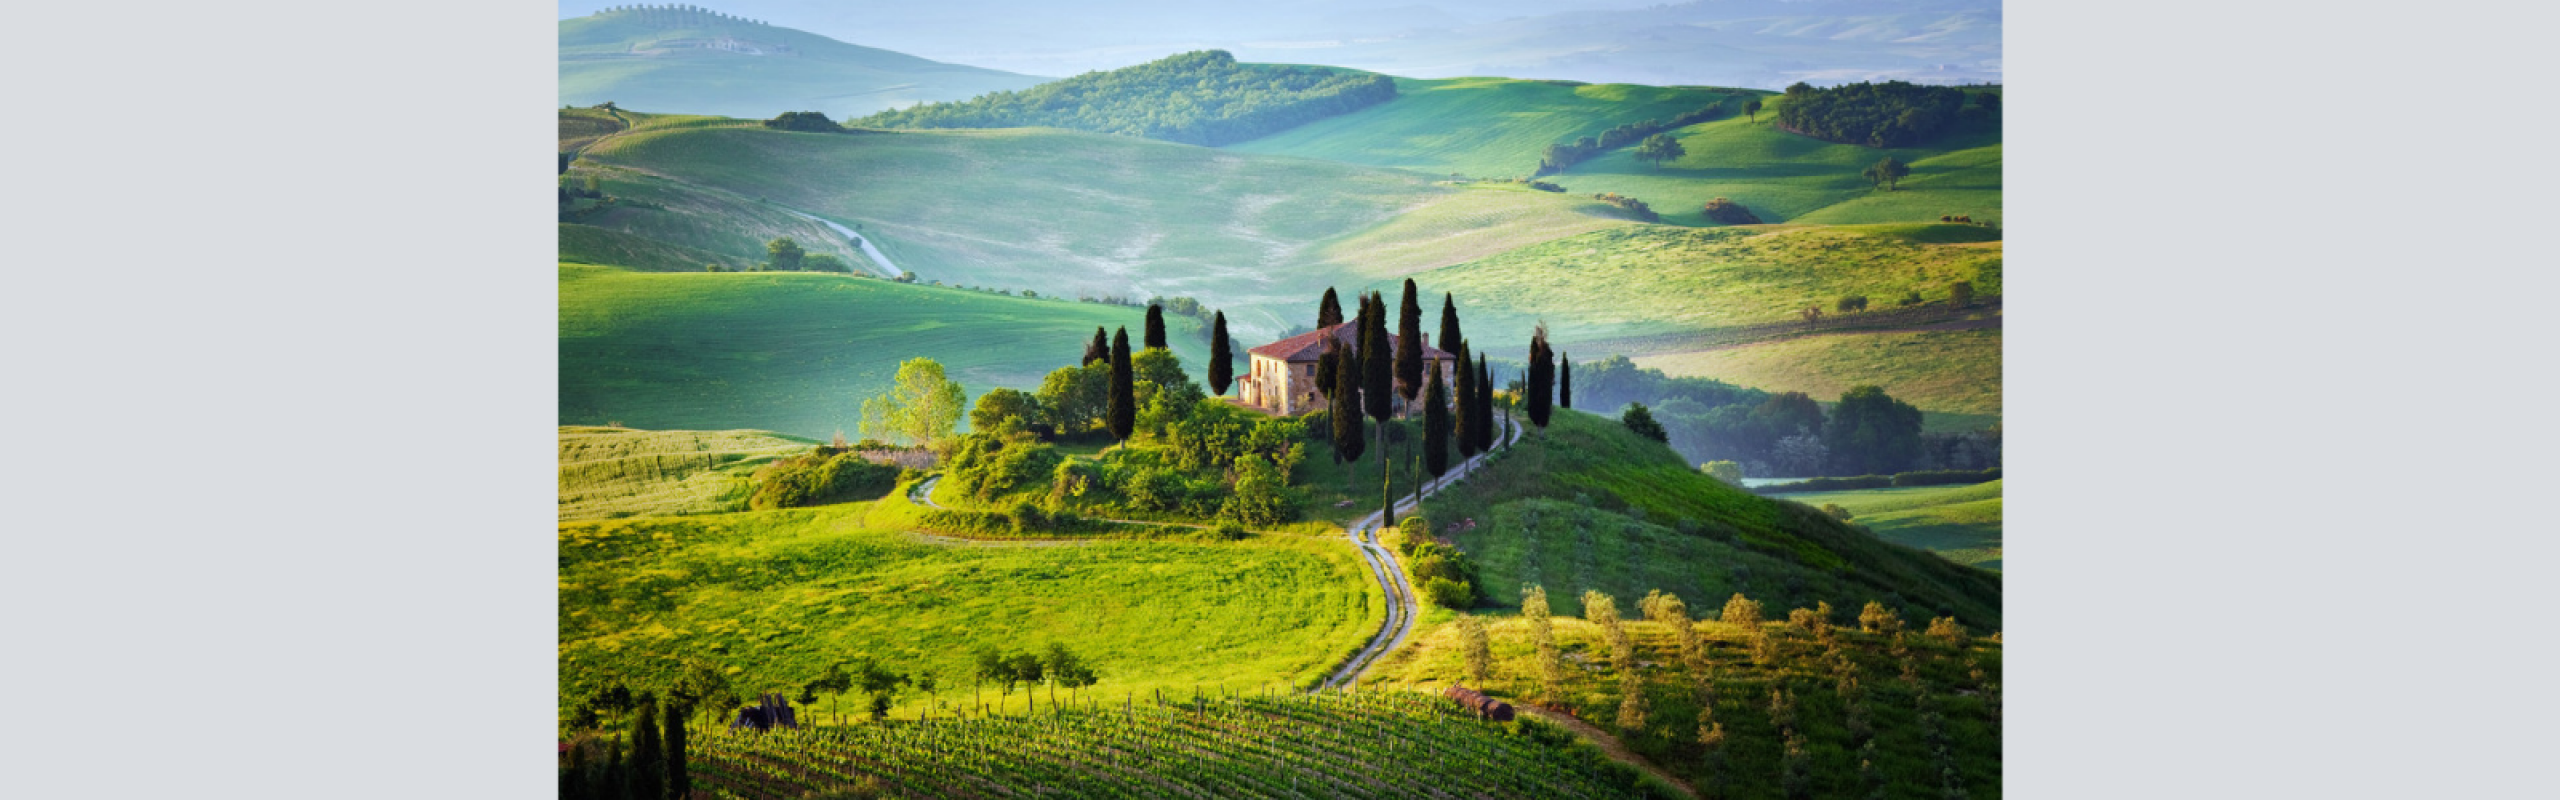 A Taste of Modernity - The Tuscan Wine Revolution